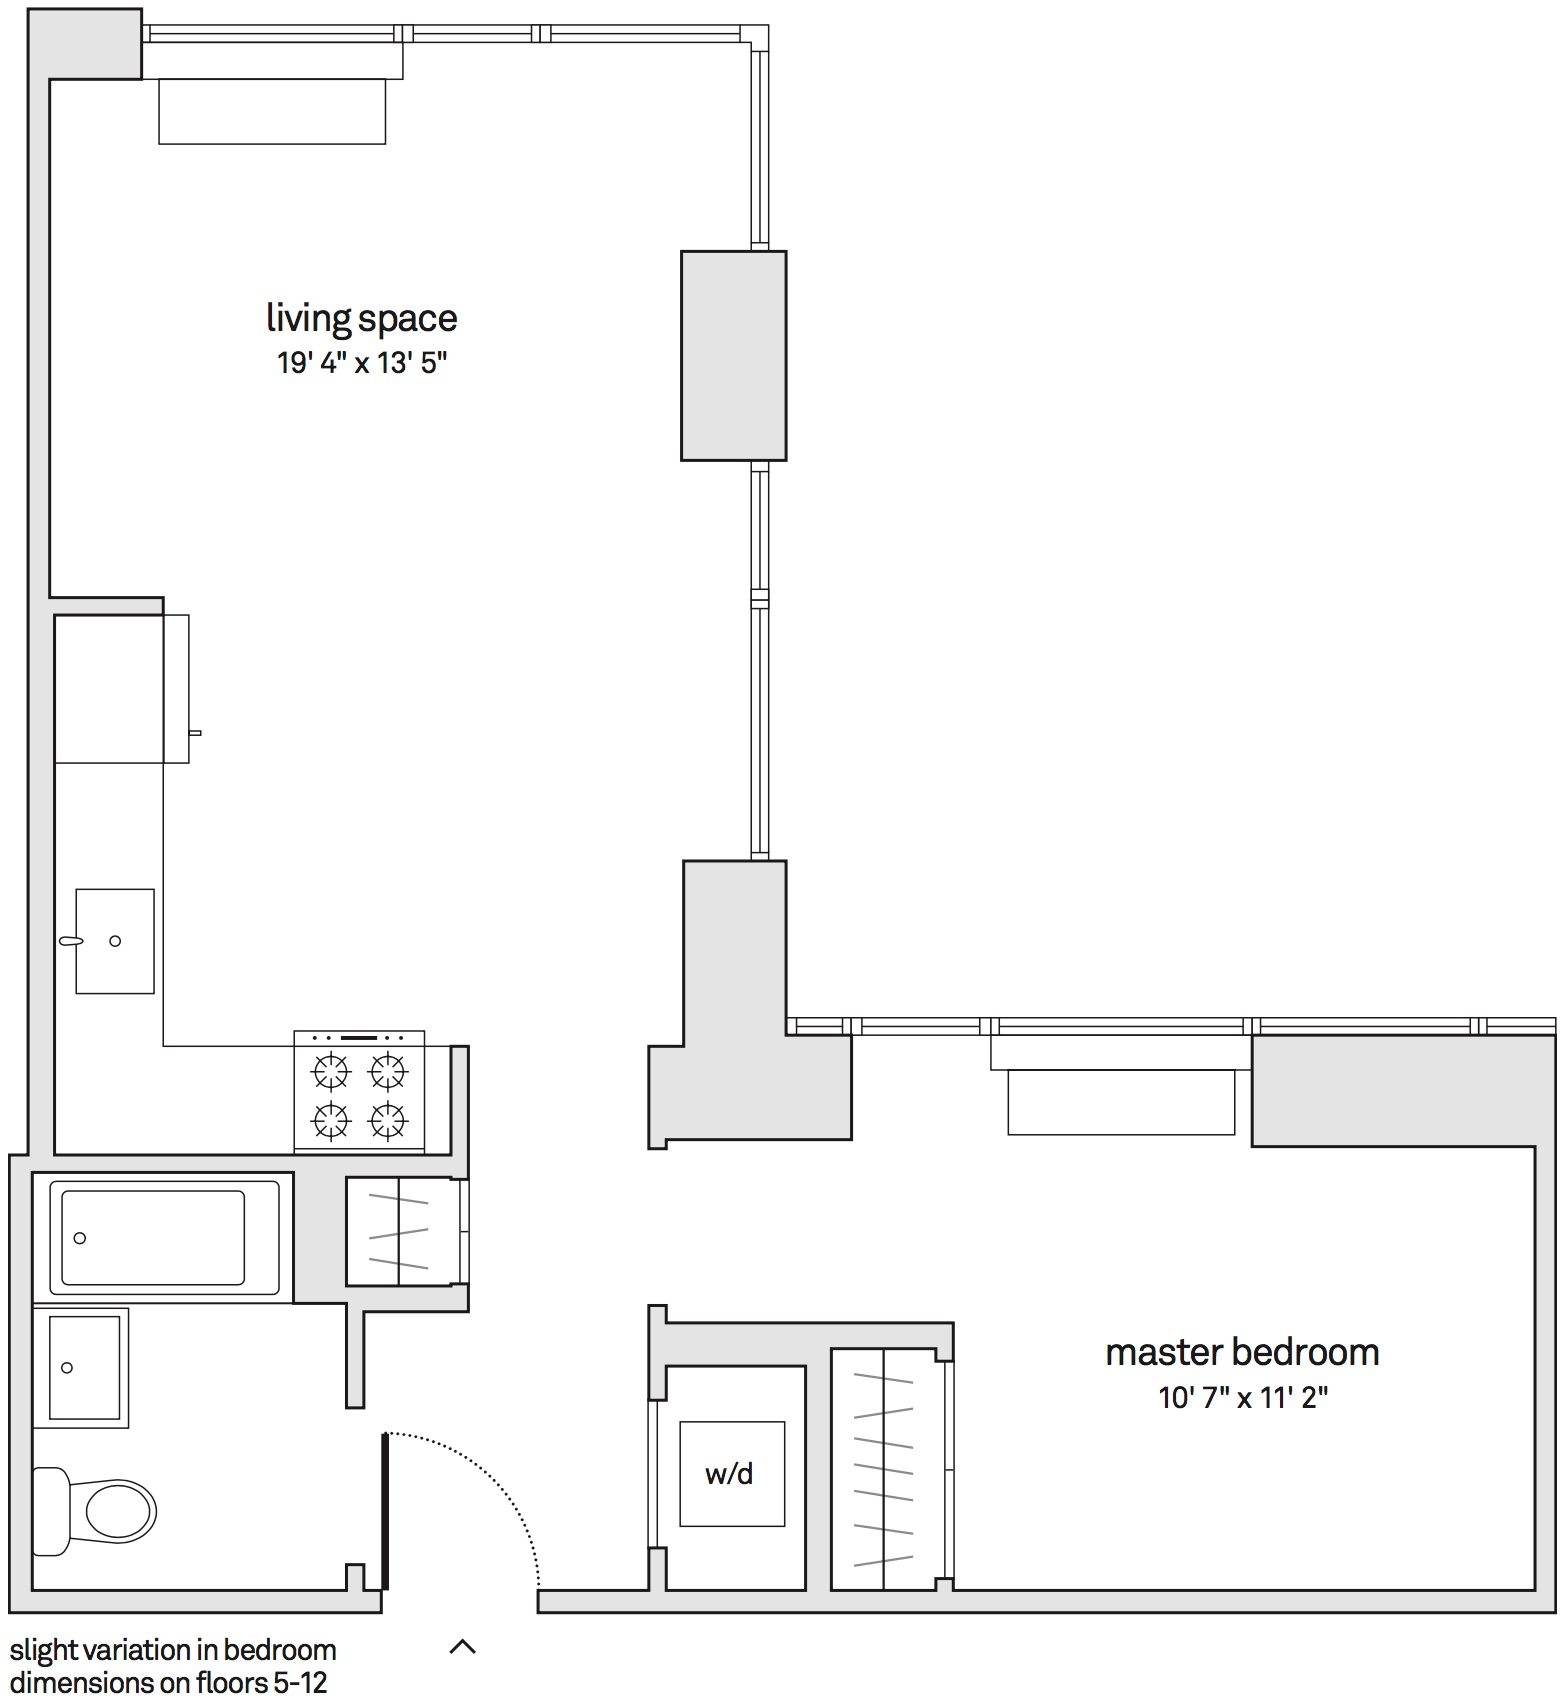 Floorplan of unit 7E.